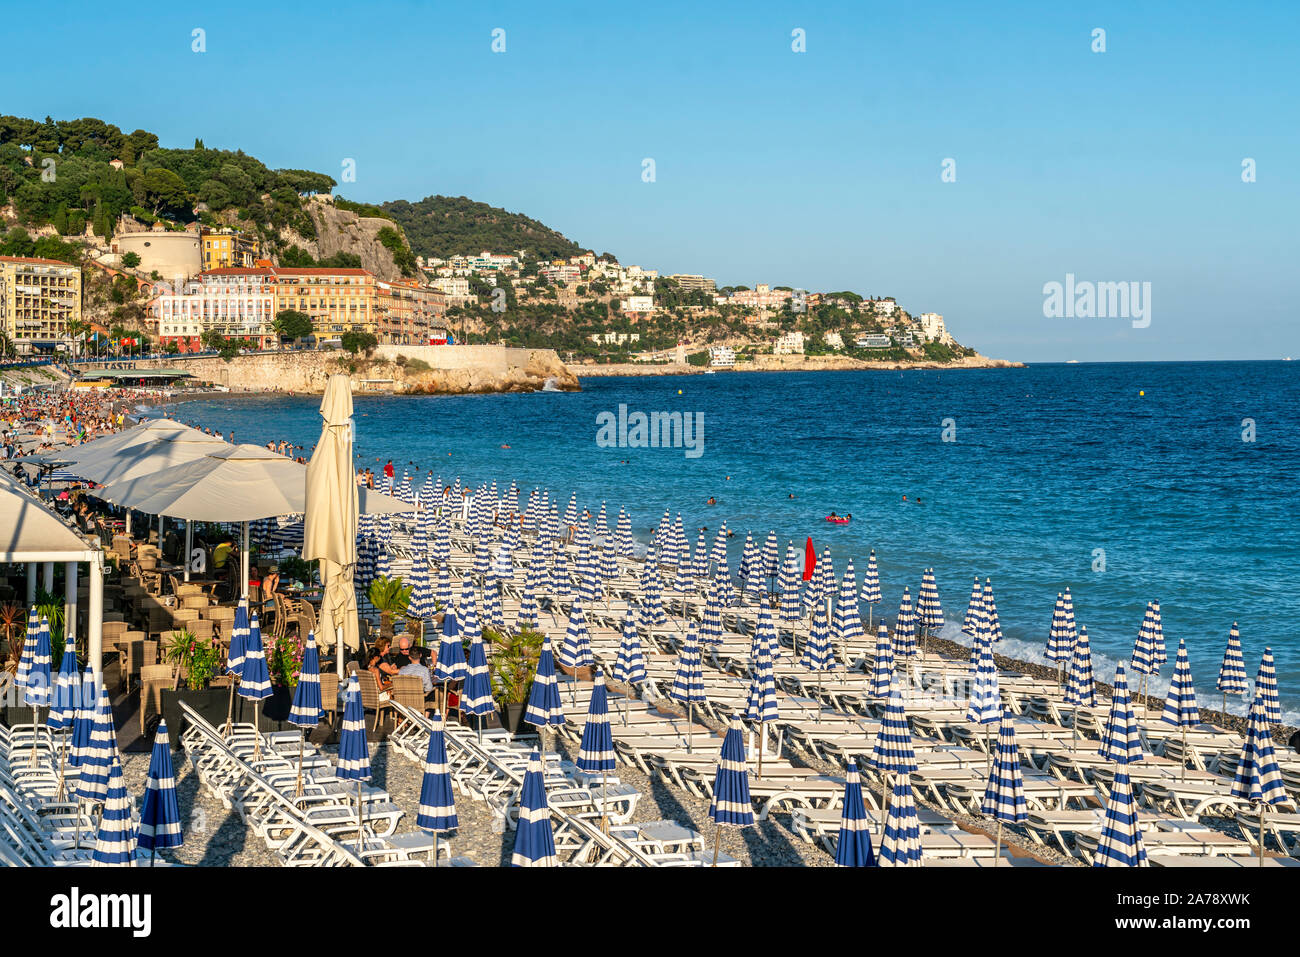 Plage Promenade des Anglais, Nice, France, Stock Photo